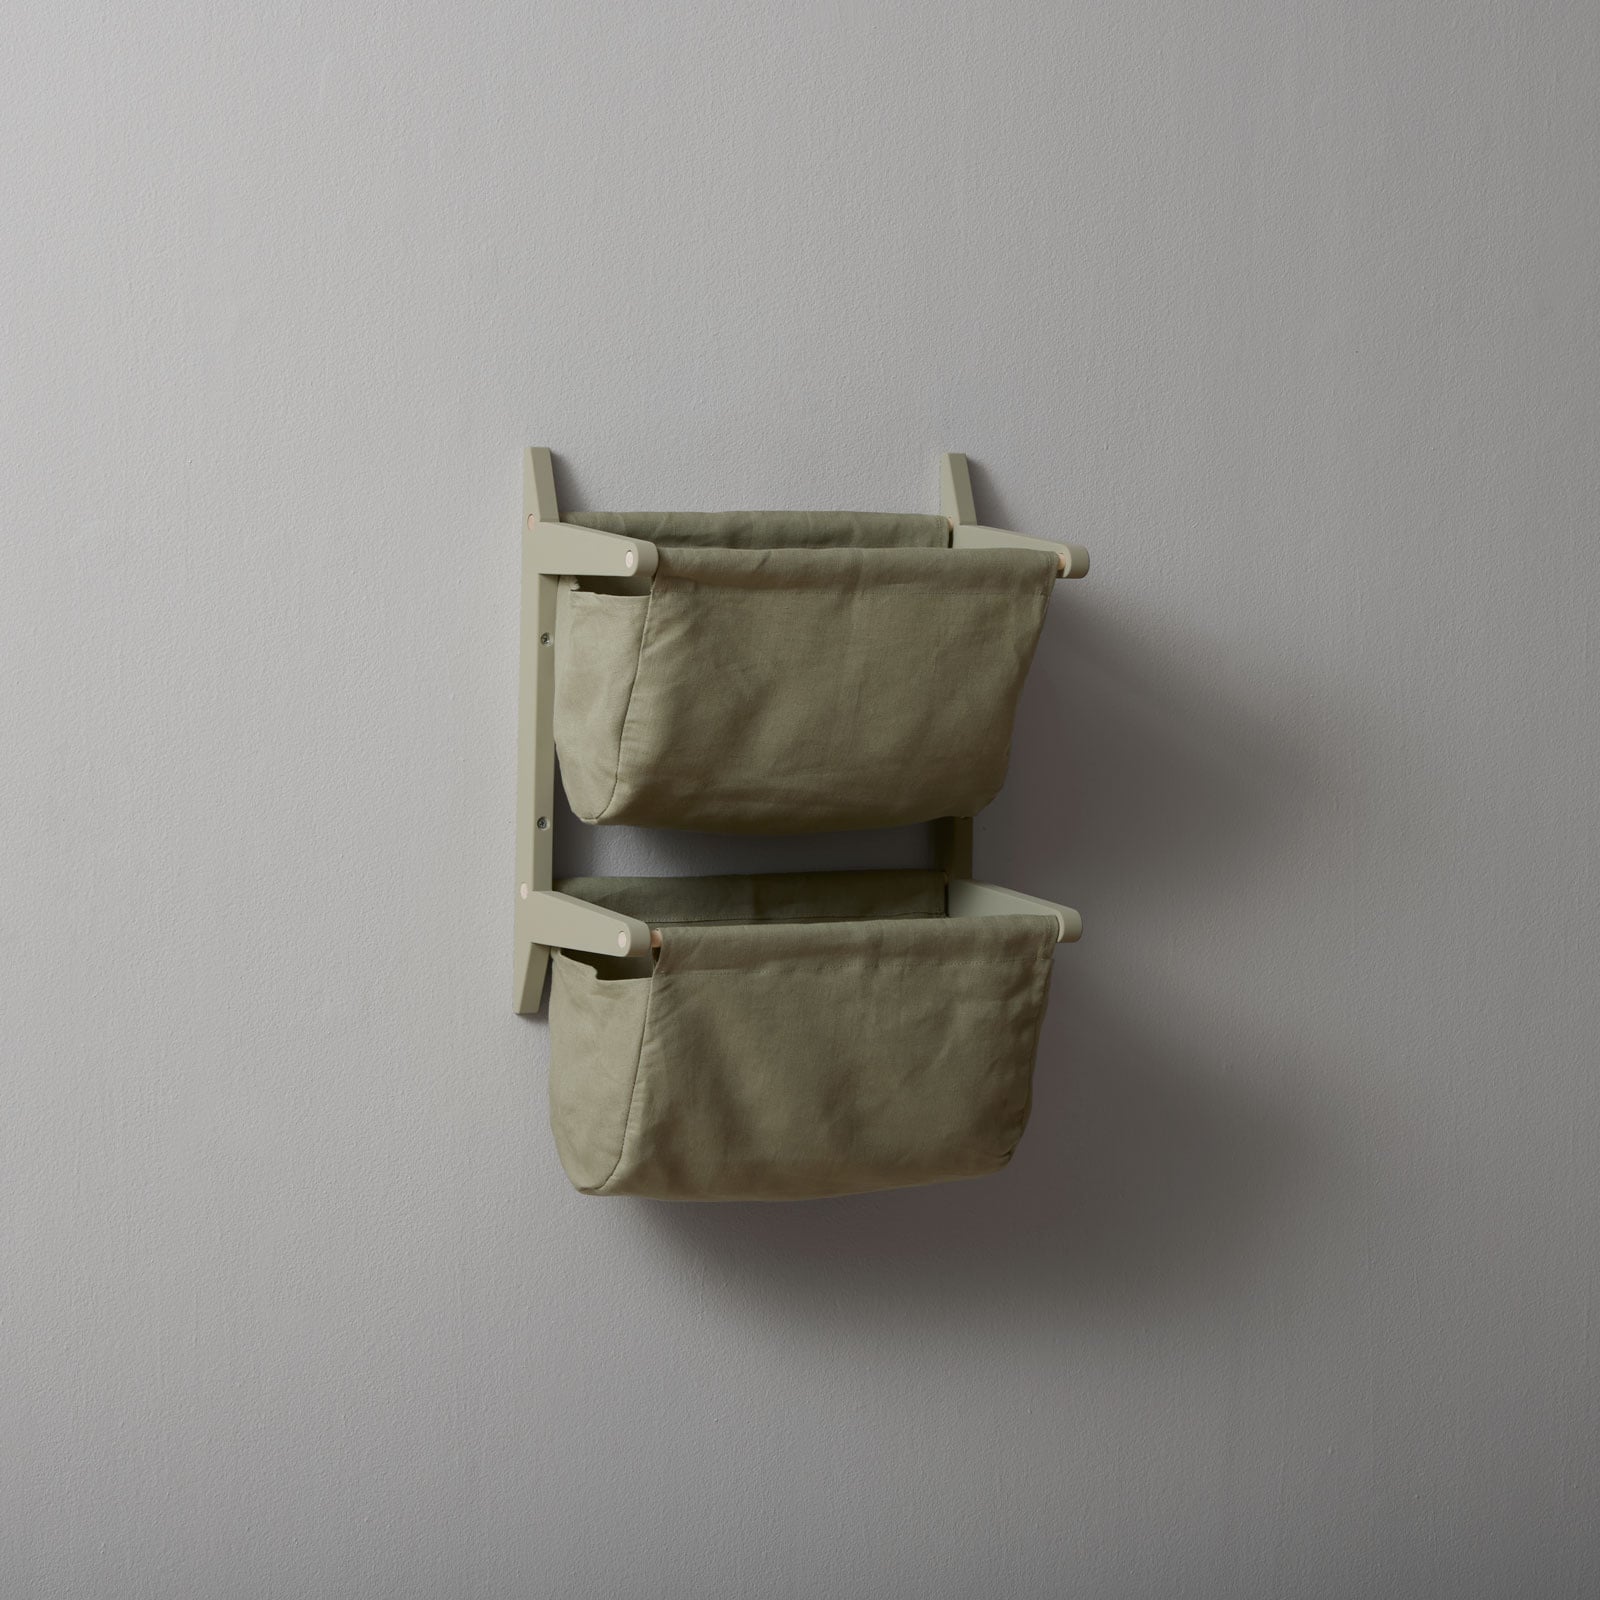 Bag Shelf with 2 bags